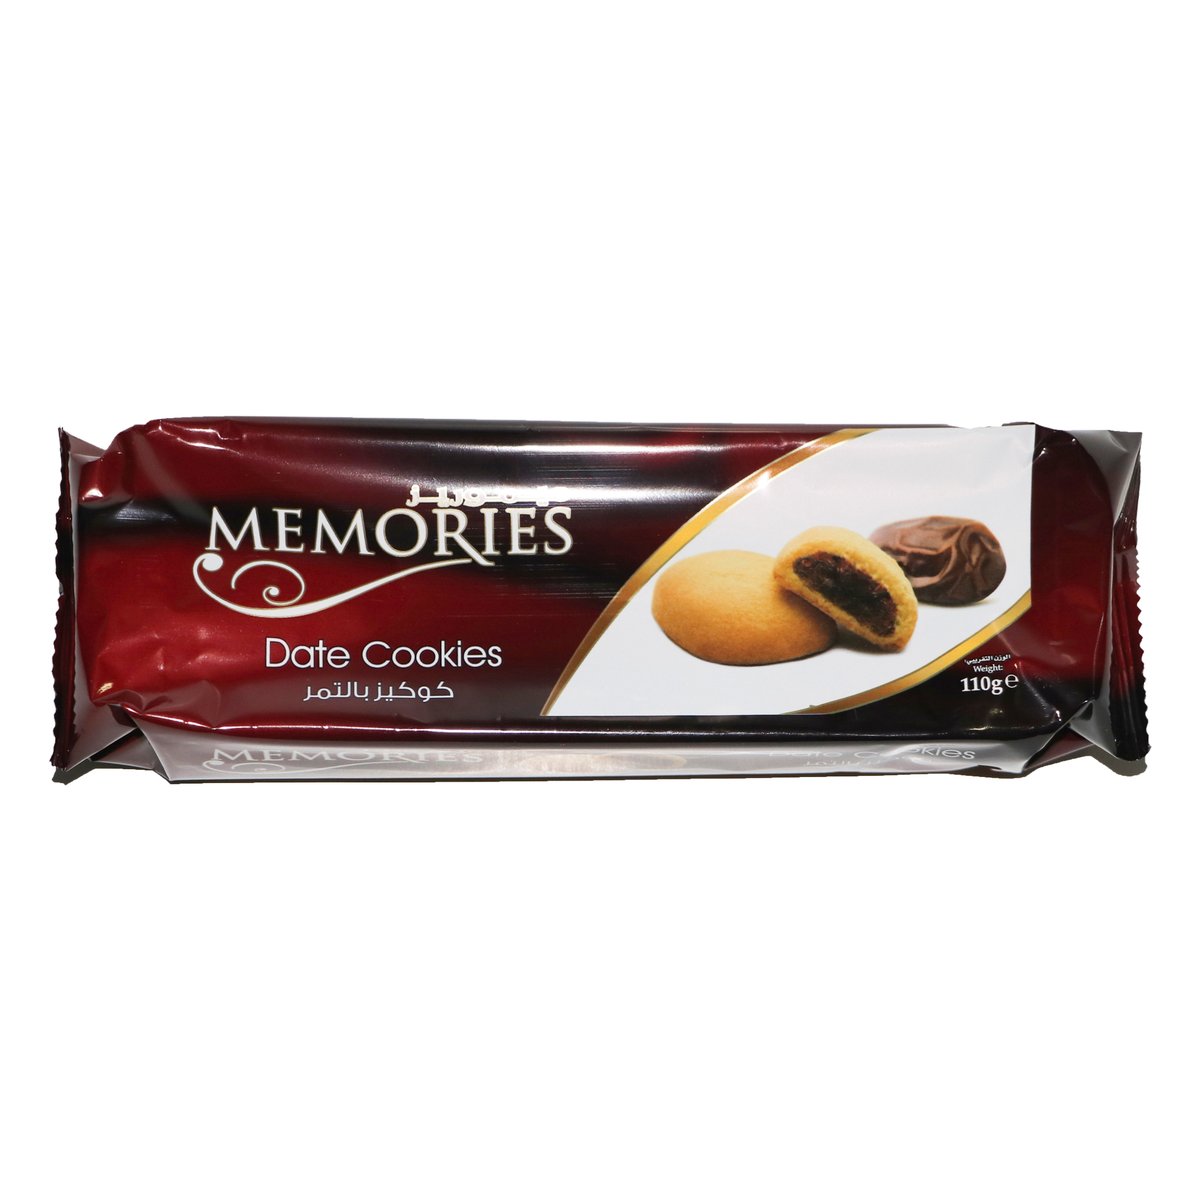 Memories Date Cookies 110g